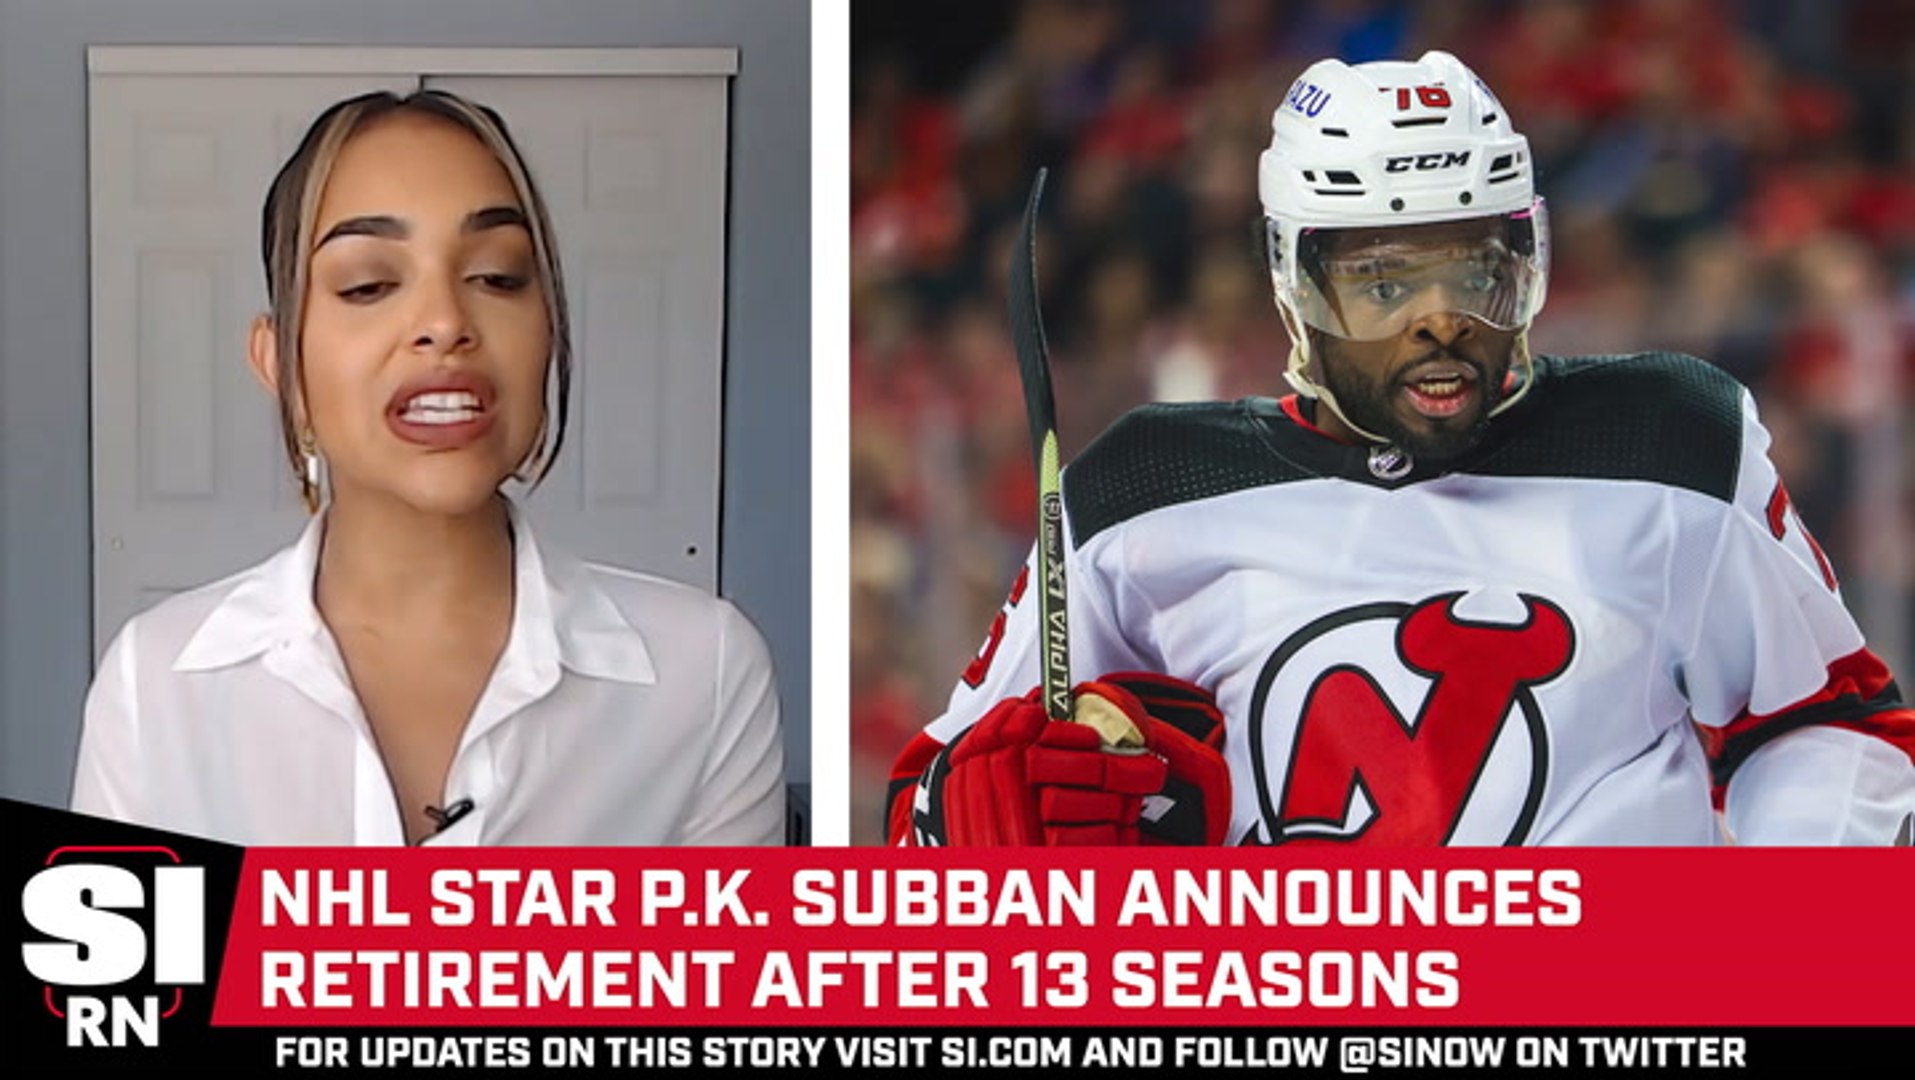 P.K. Subban retires after 13 NHL seasons